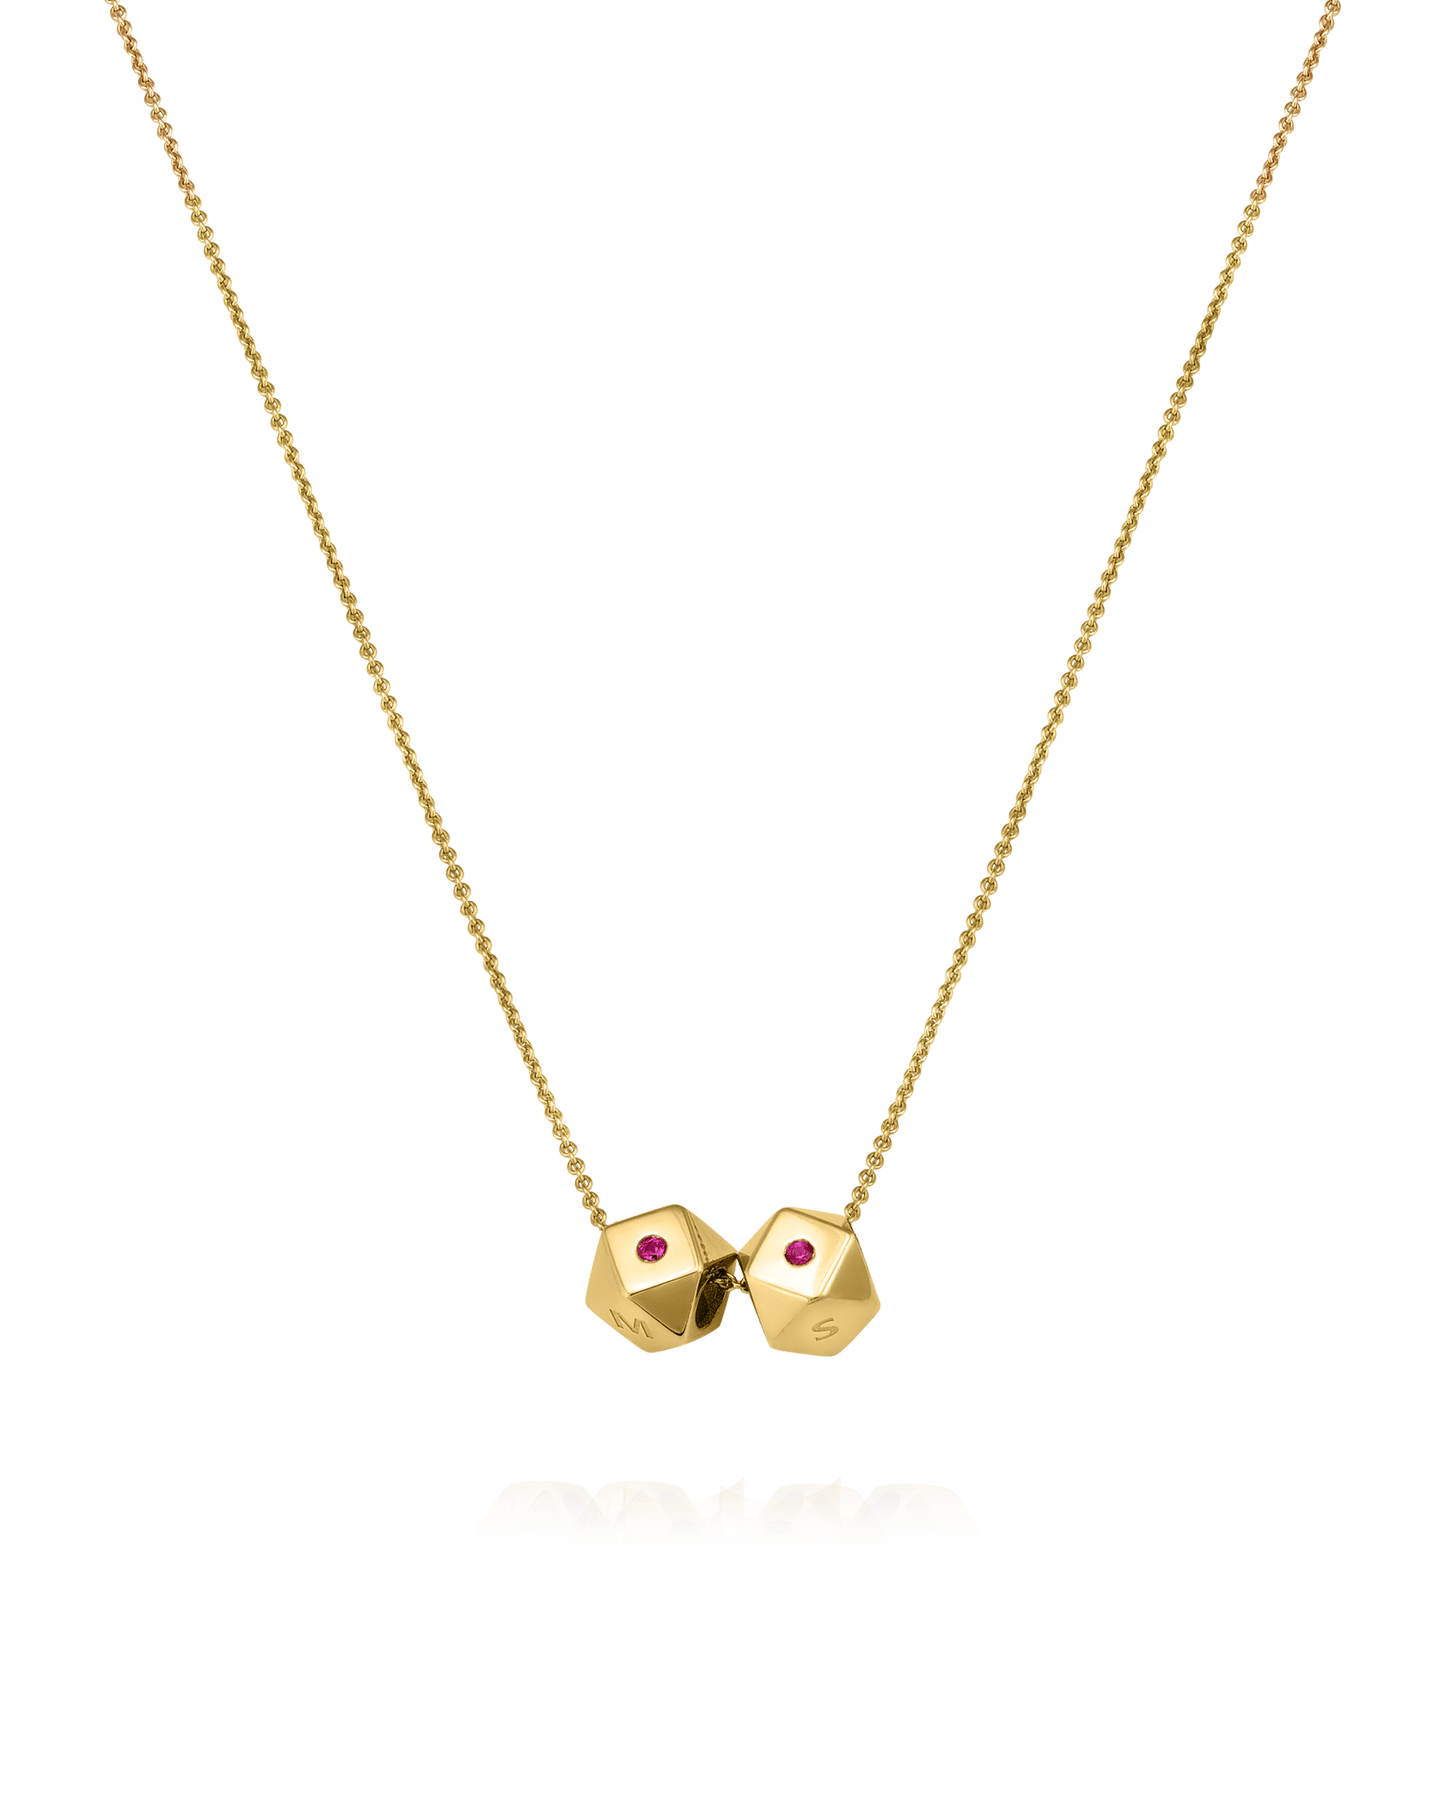 Hedra Necklace - 18K Gold Vermeil Necklaces magal-dev 2 Charms 16”+2” extender 